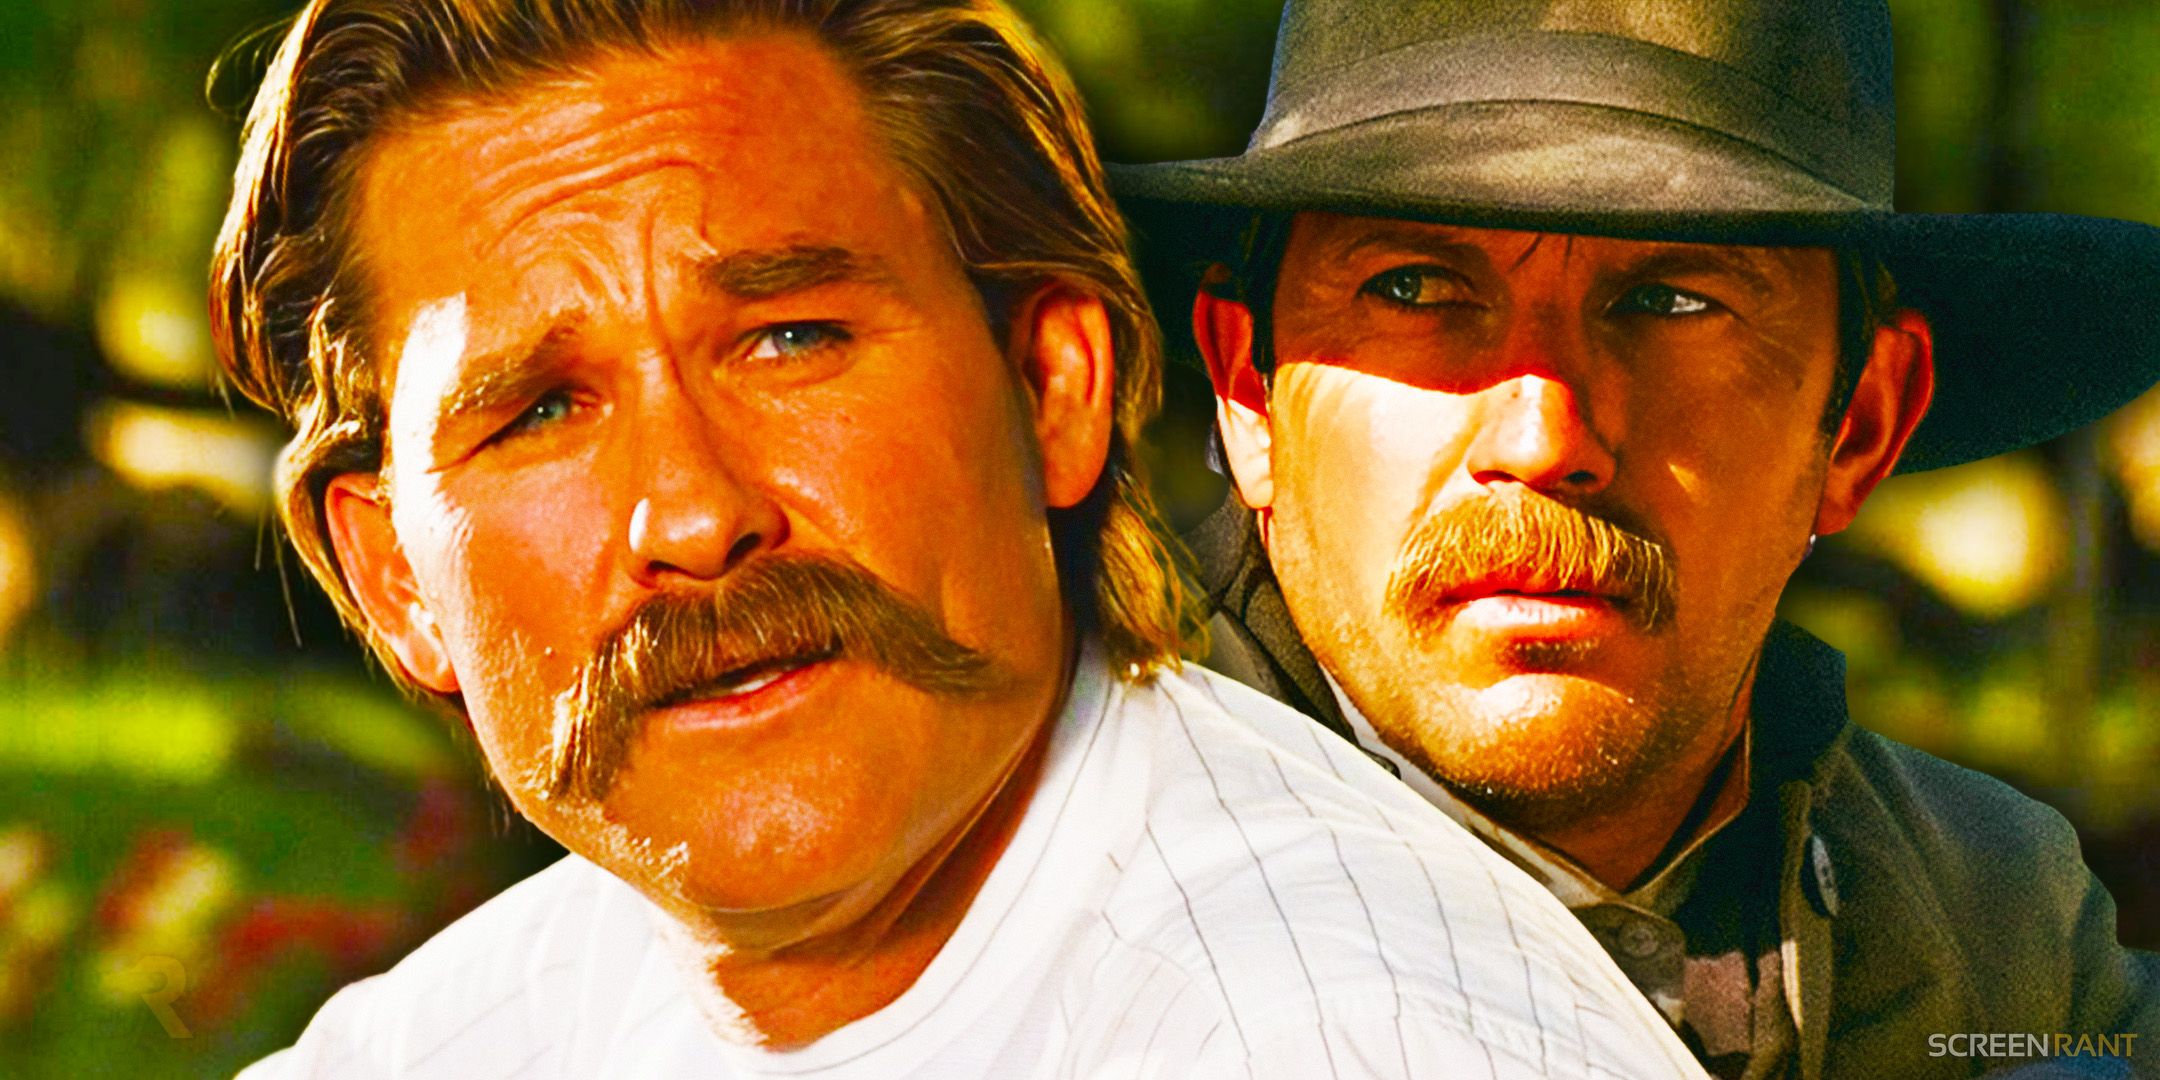 Wyatt Earp de Kurt Russell de Tombstone olha para o intenso Wyatt Earp de Kevin Costner no filme Wyatt Earp de 1994